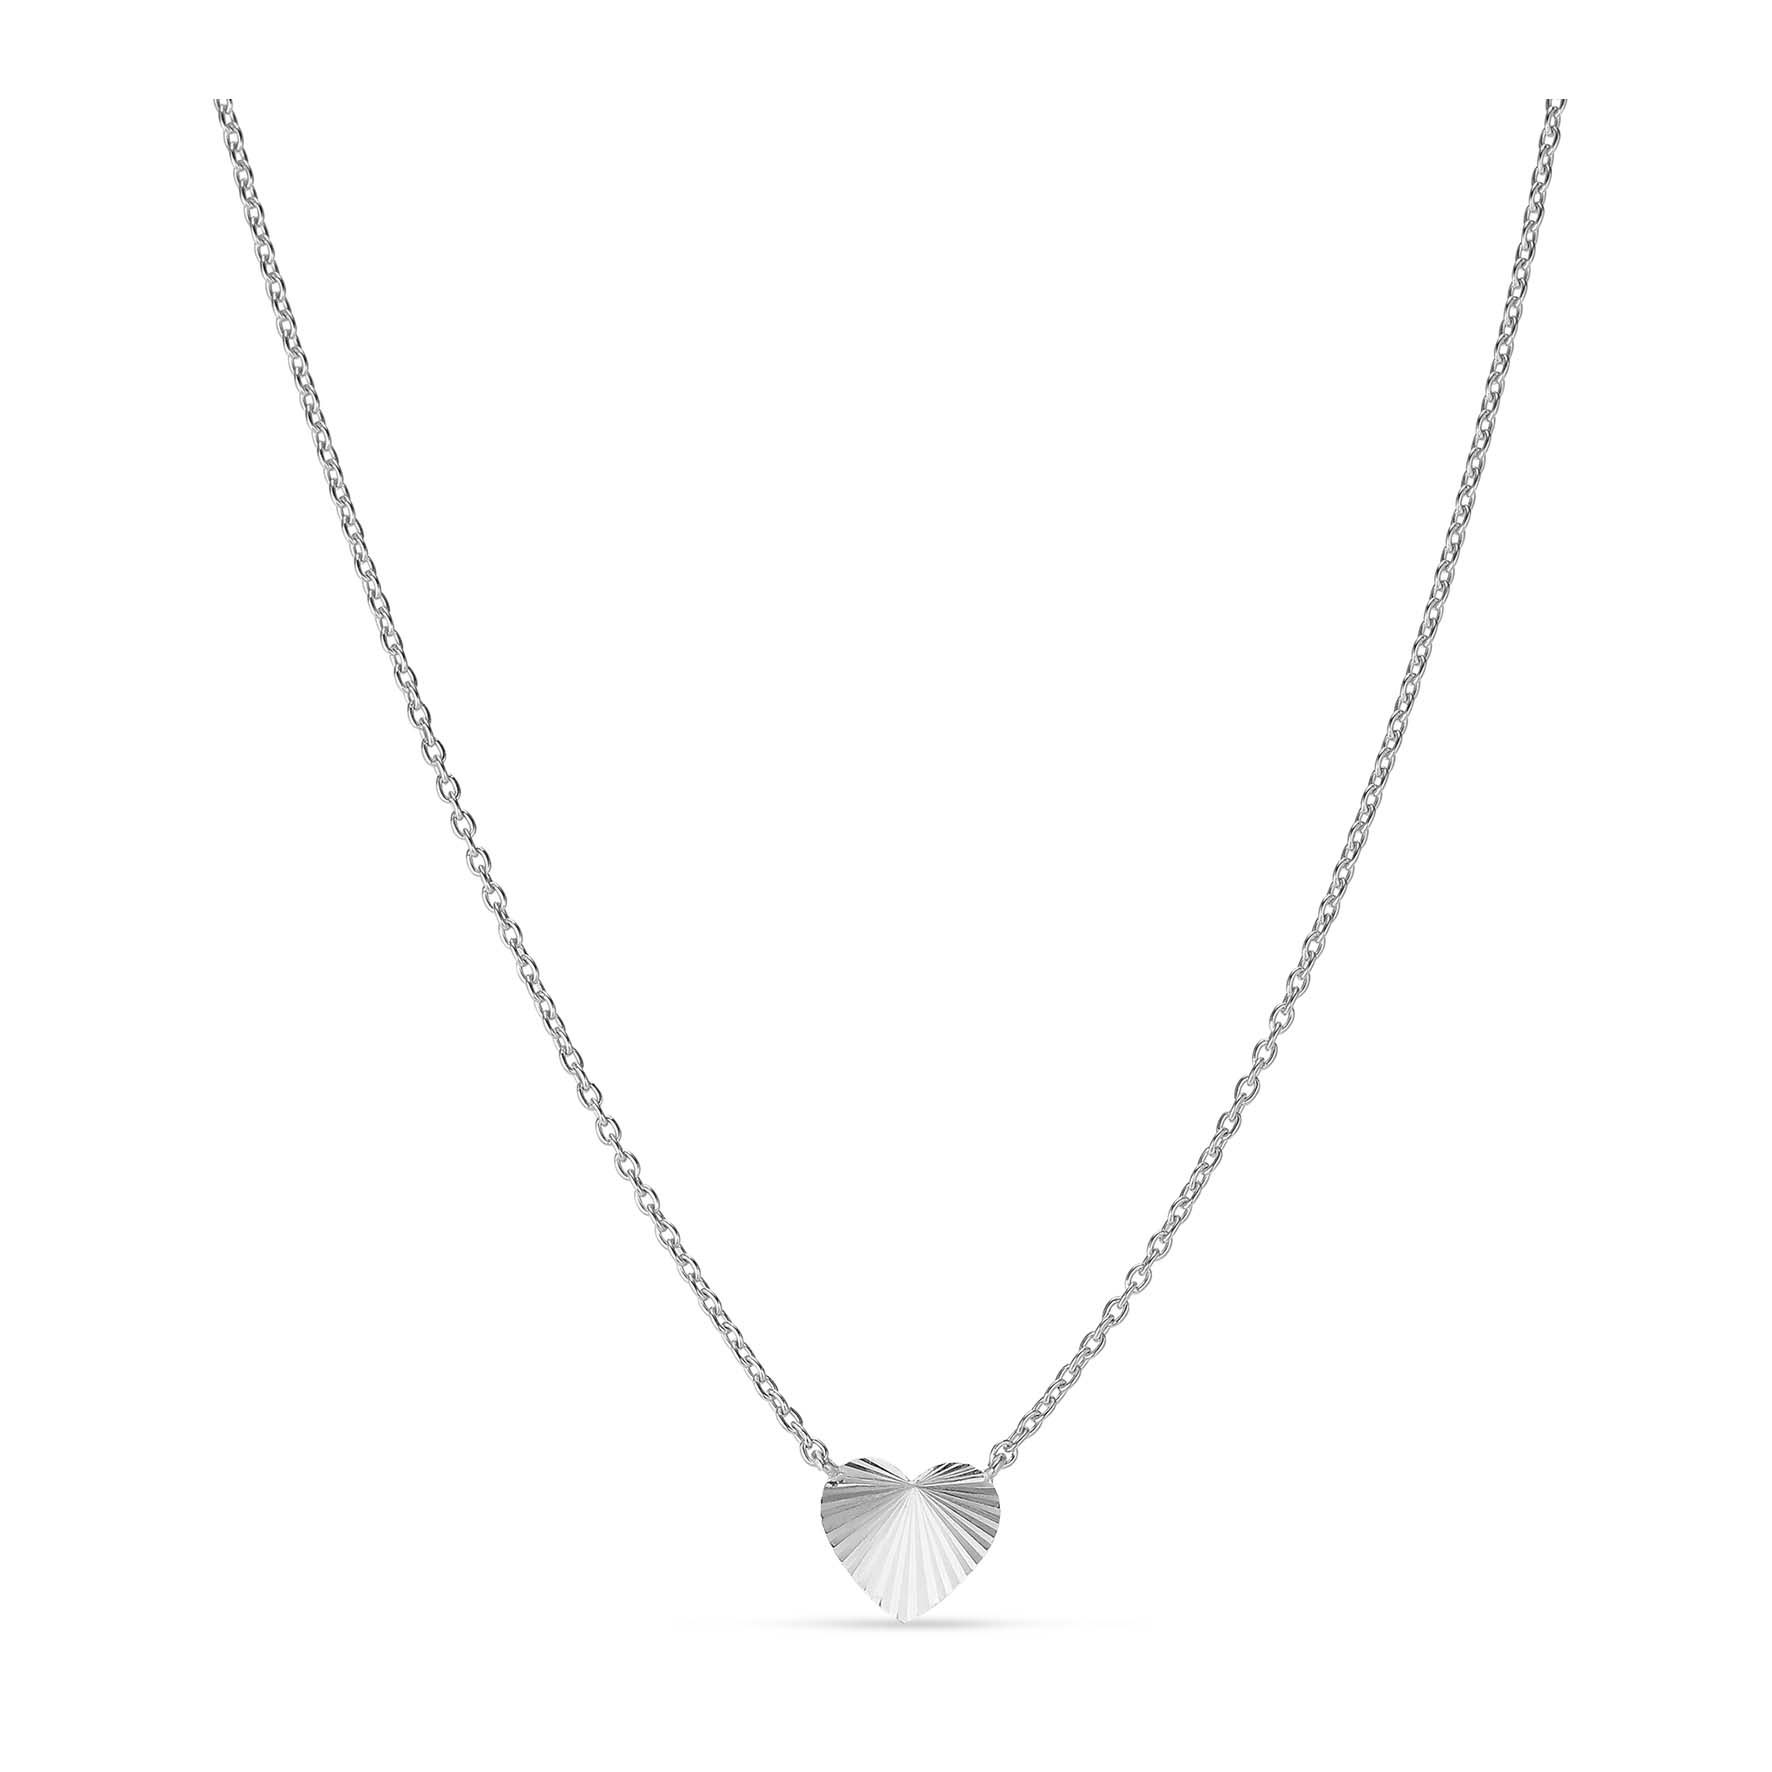 Reflection Heart Necklace von Jane Kønig in Silber Sterling 925